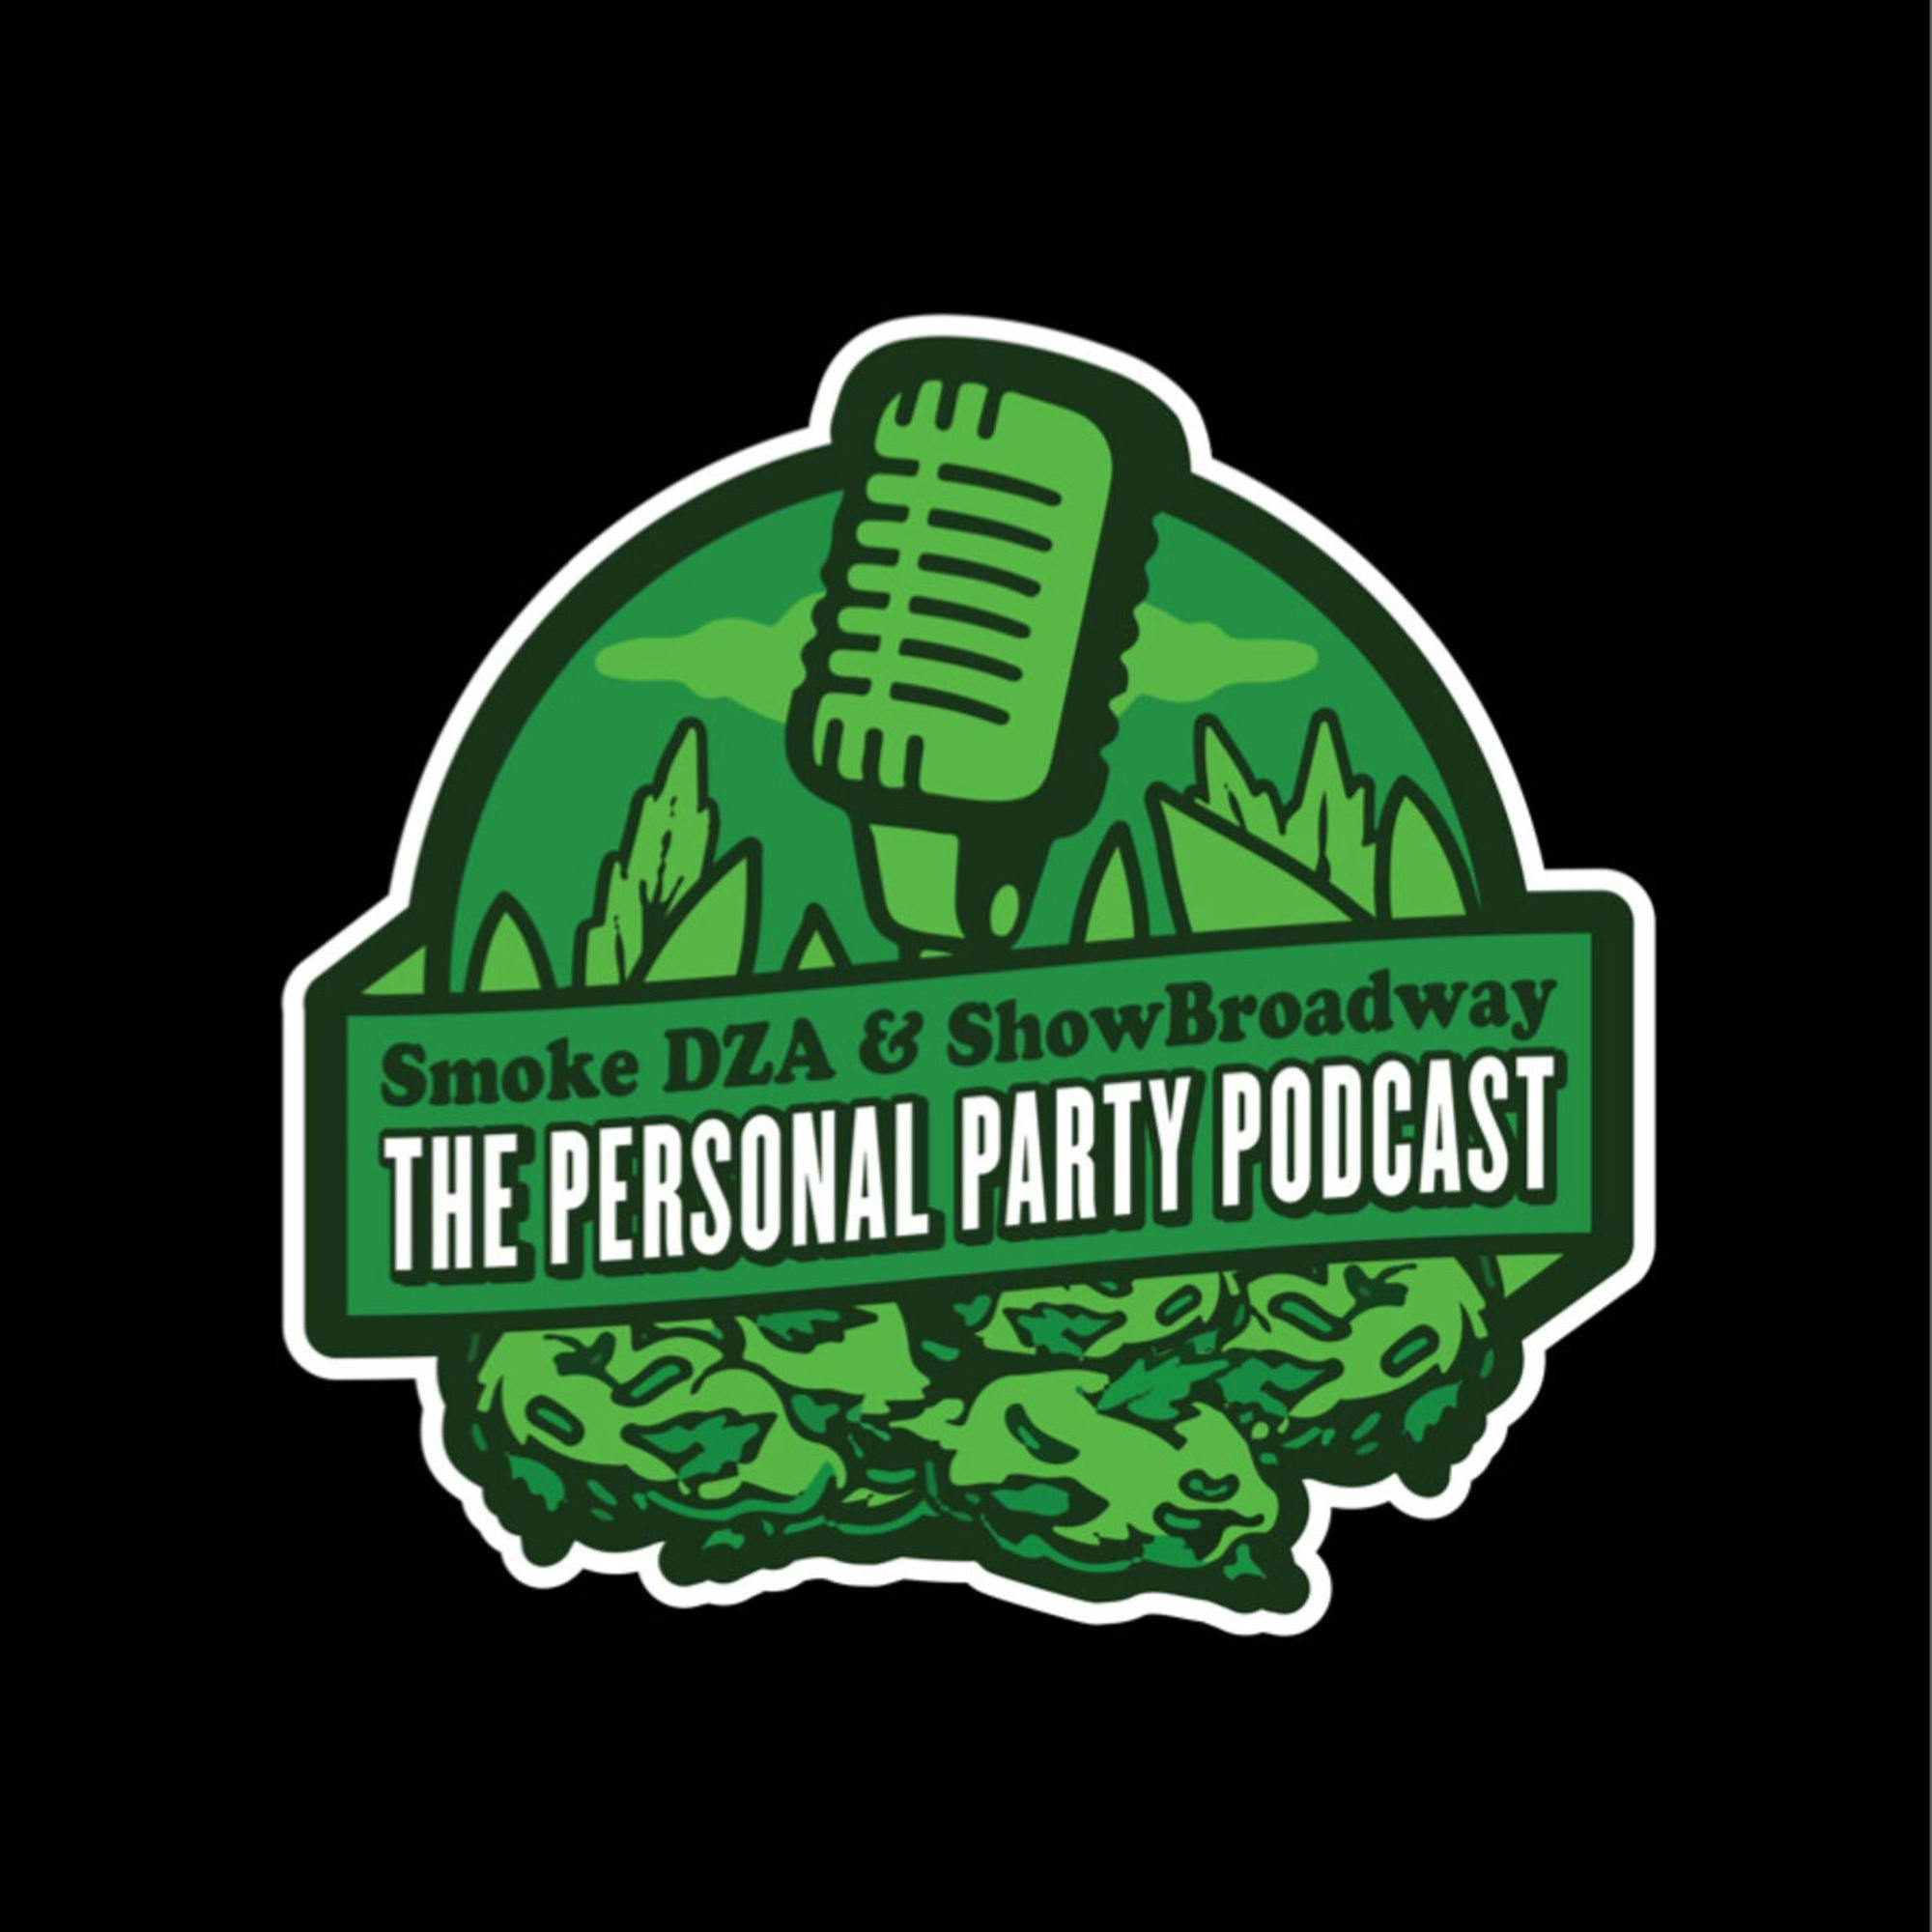 Big K.R.I.T - "K.R.I.T Is Here" - The Personal Party Podcast Episode 60